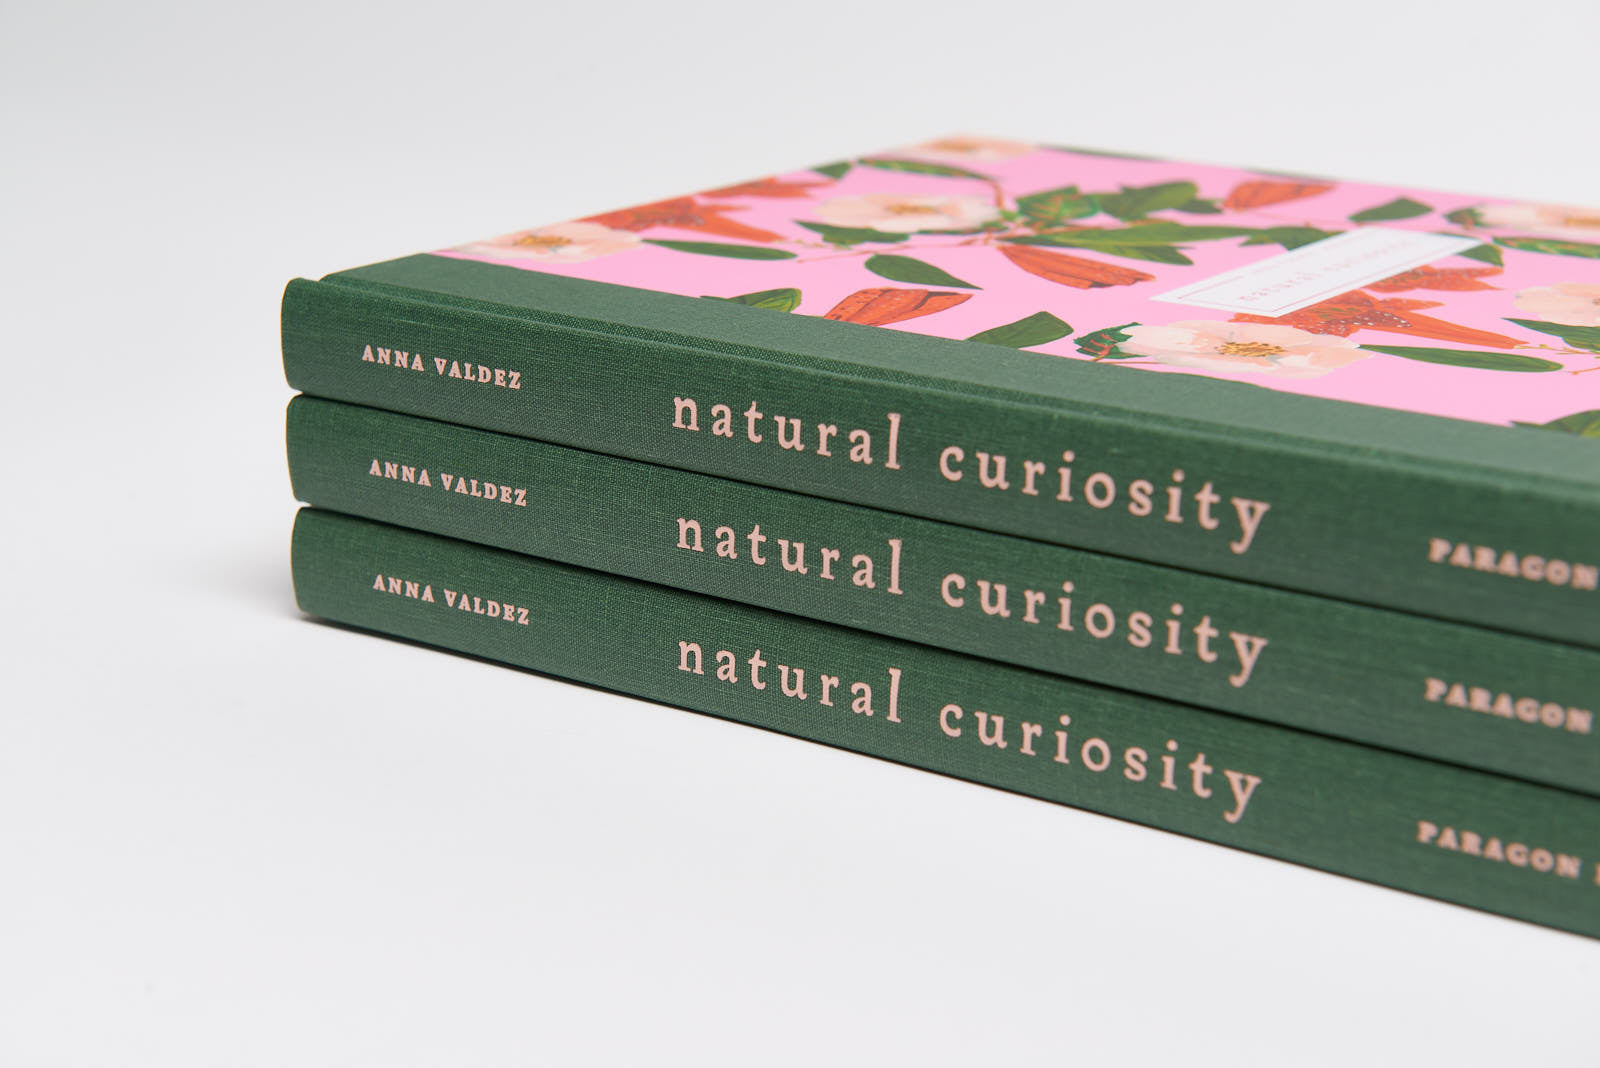 Anna Valdez: "Natural Curiosity"